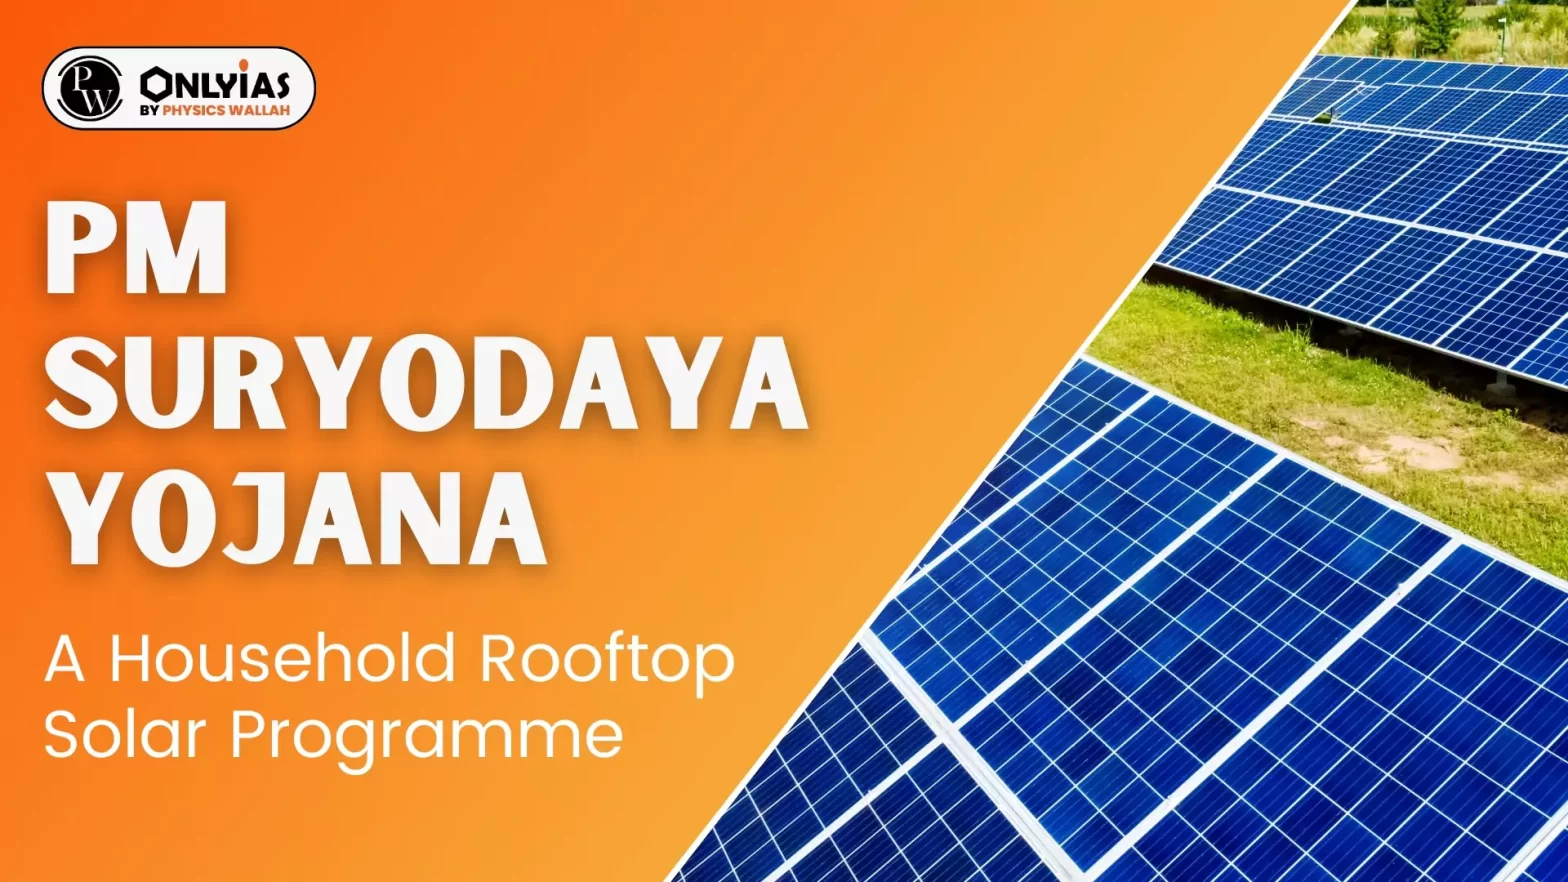 PM Suryodaya Yojana: A Household Rooftop Solar Programme